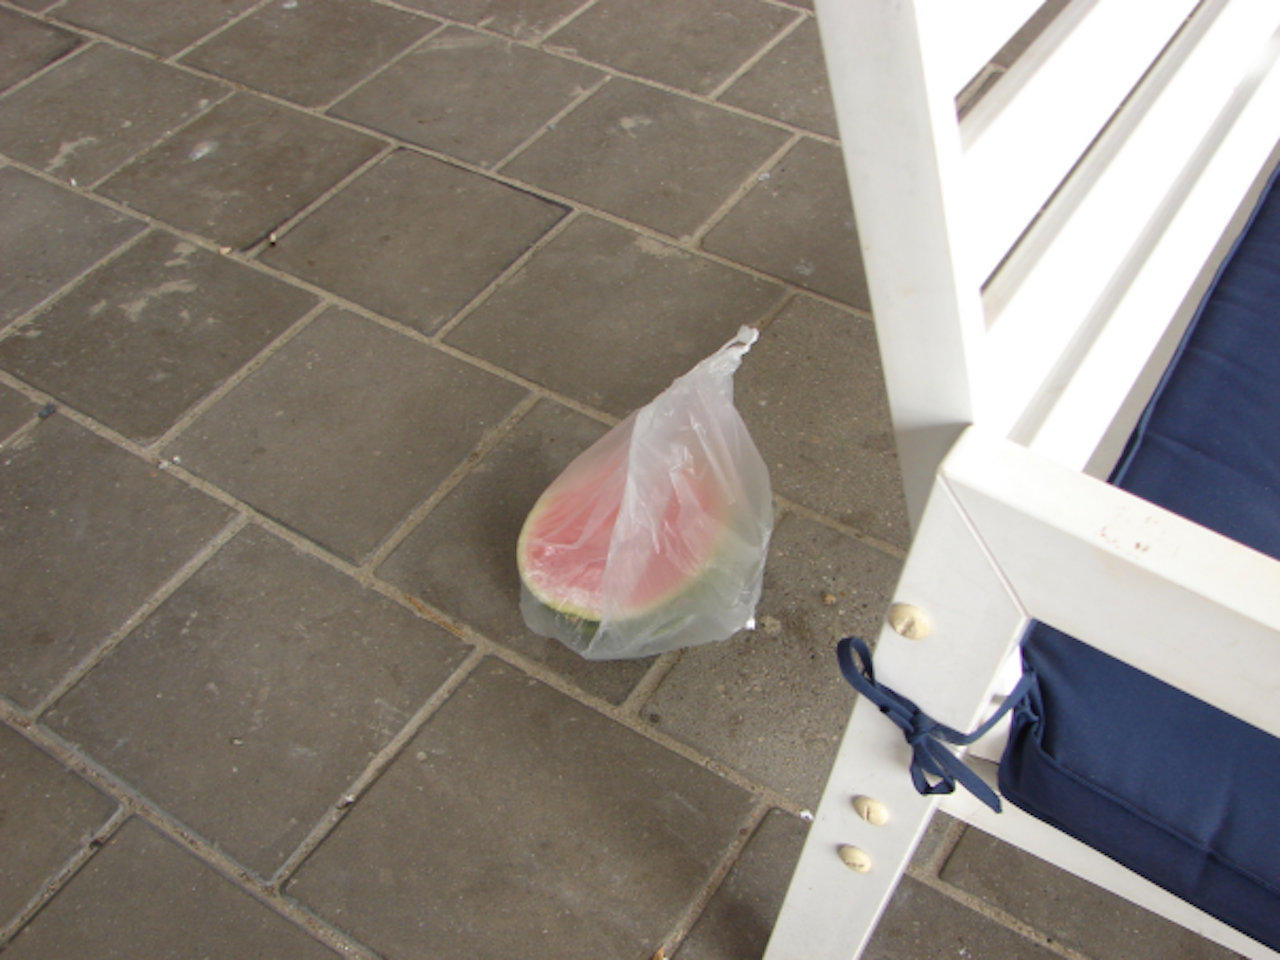 watermelon in a bag